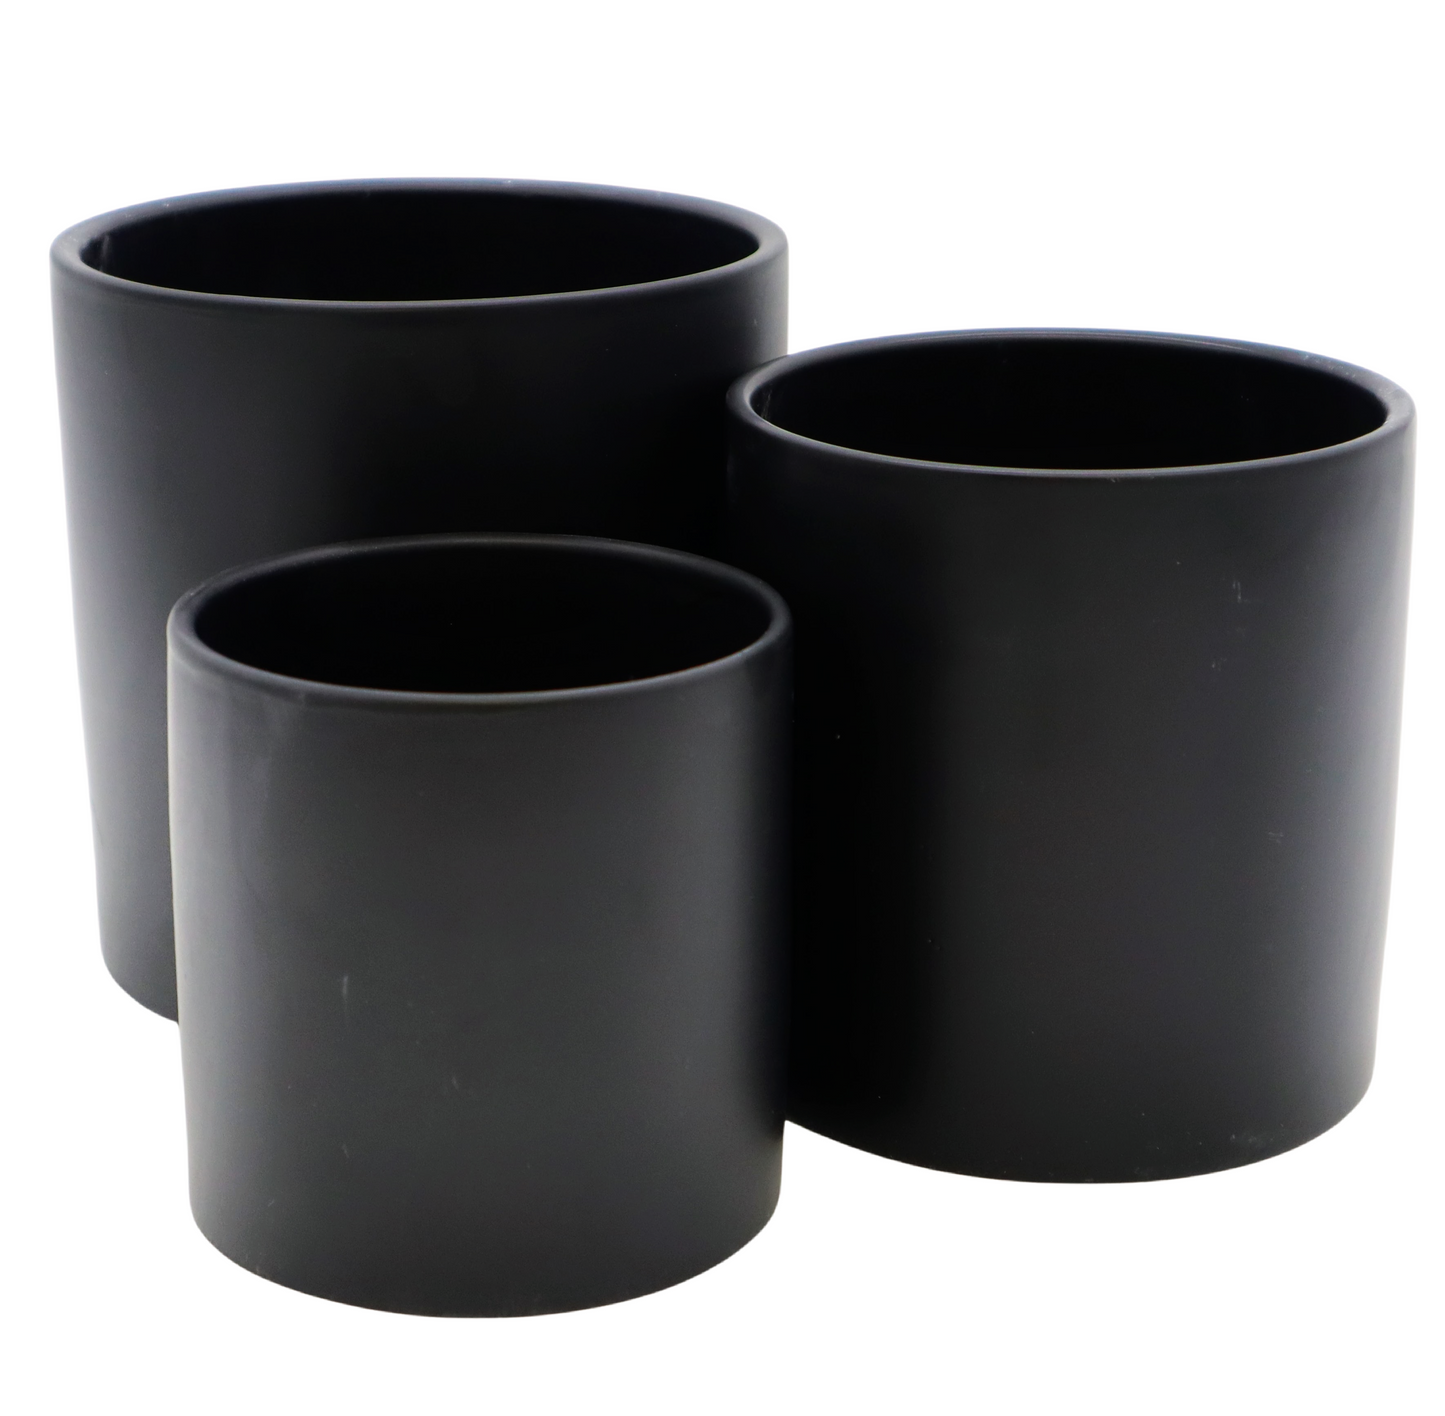 Cylinder Ceramic Container 3pc Set 7x7 6x6.5 5x5